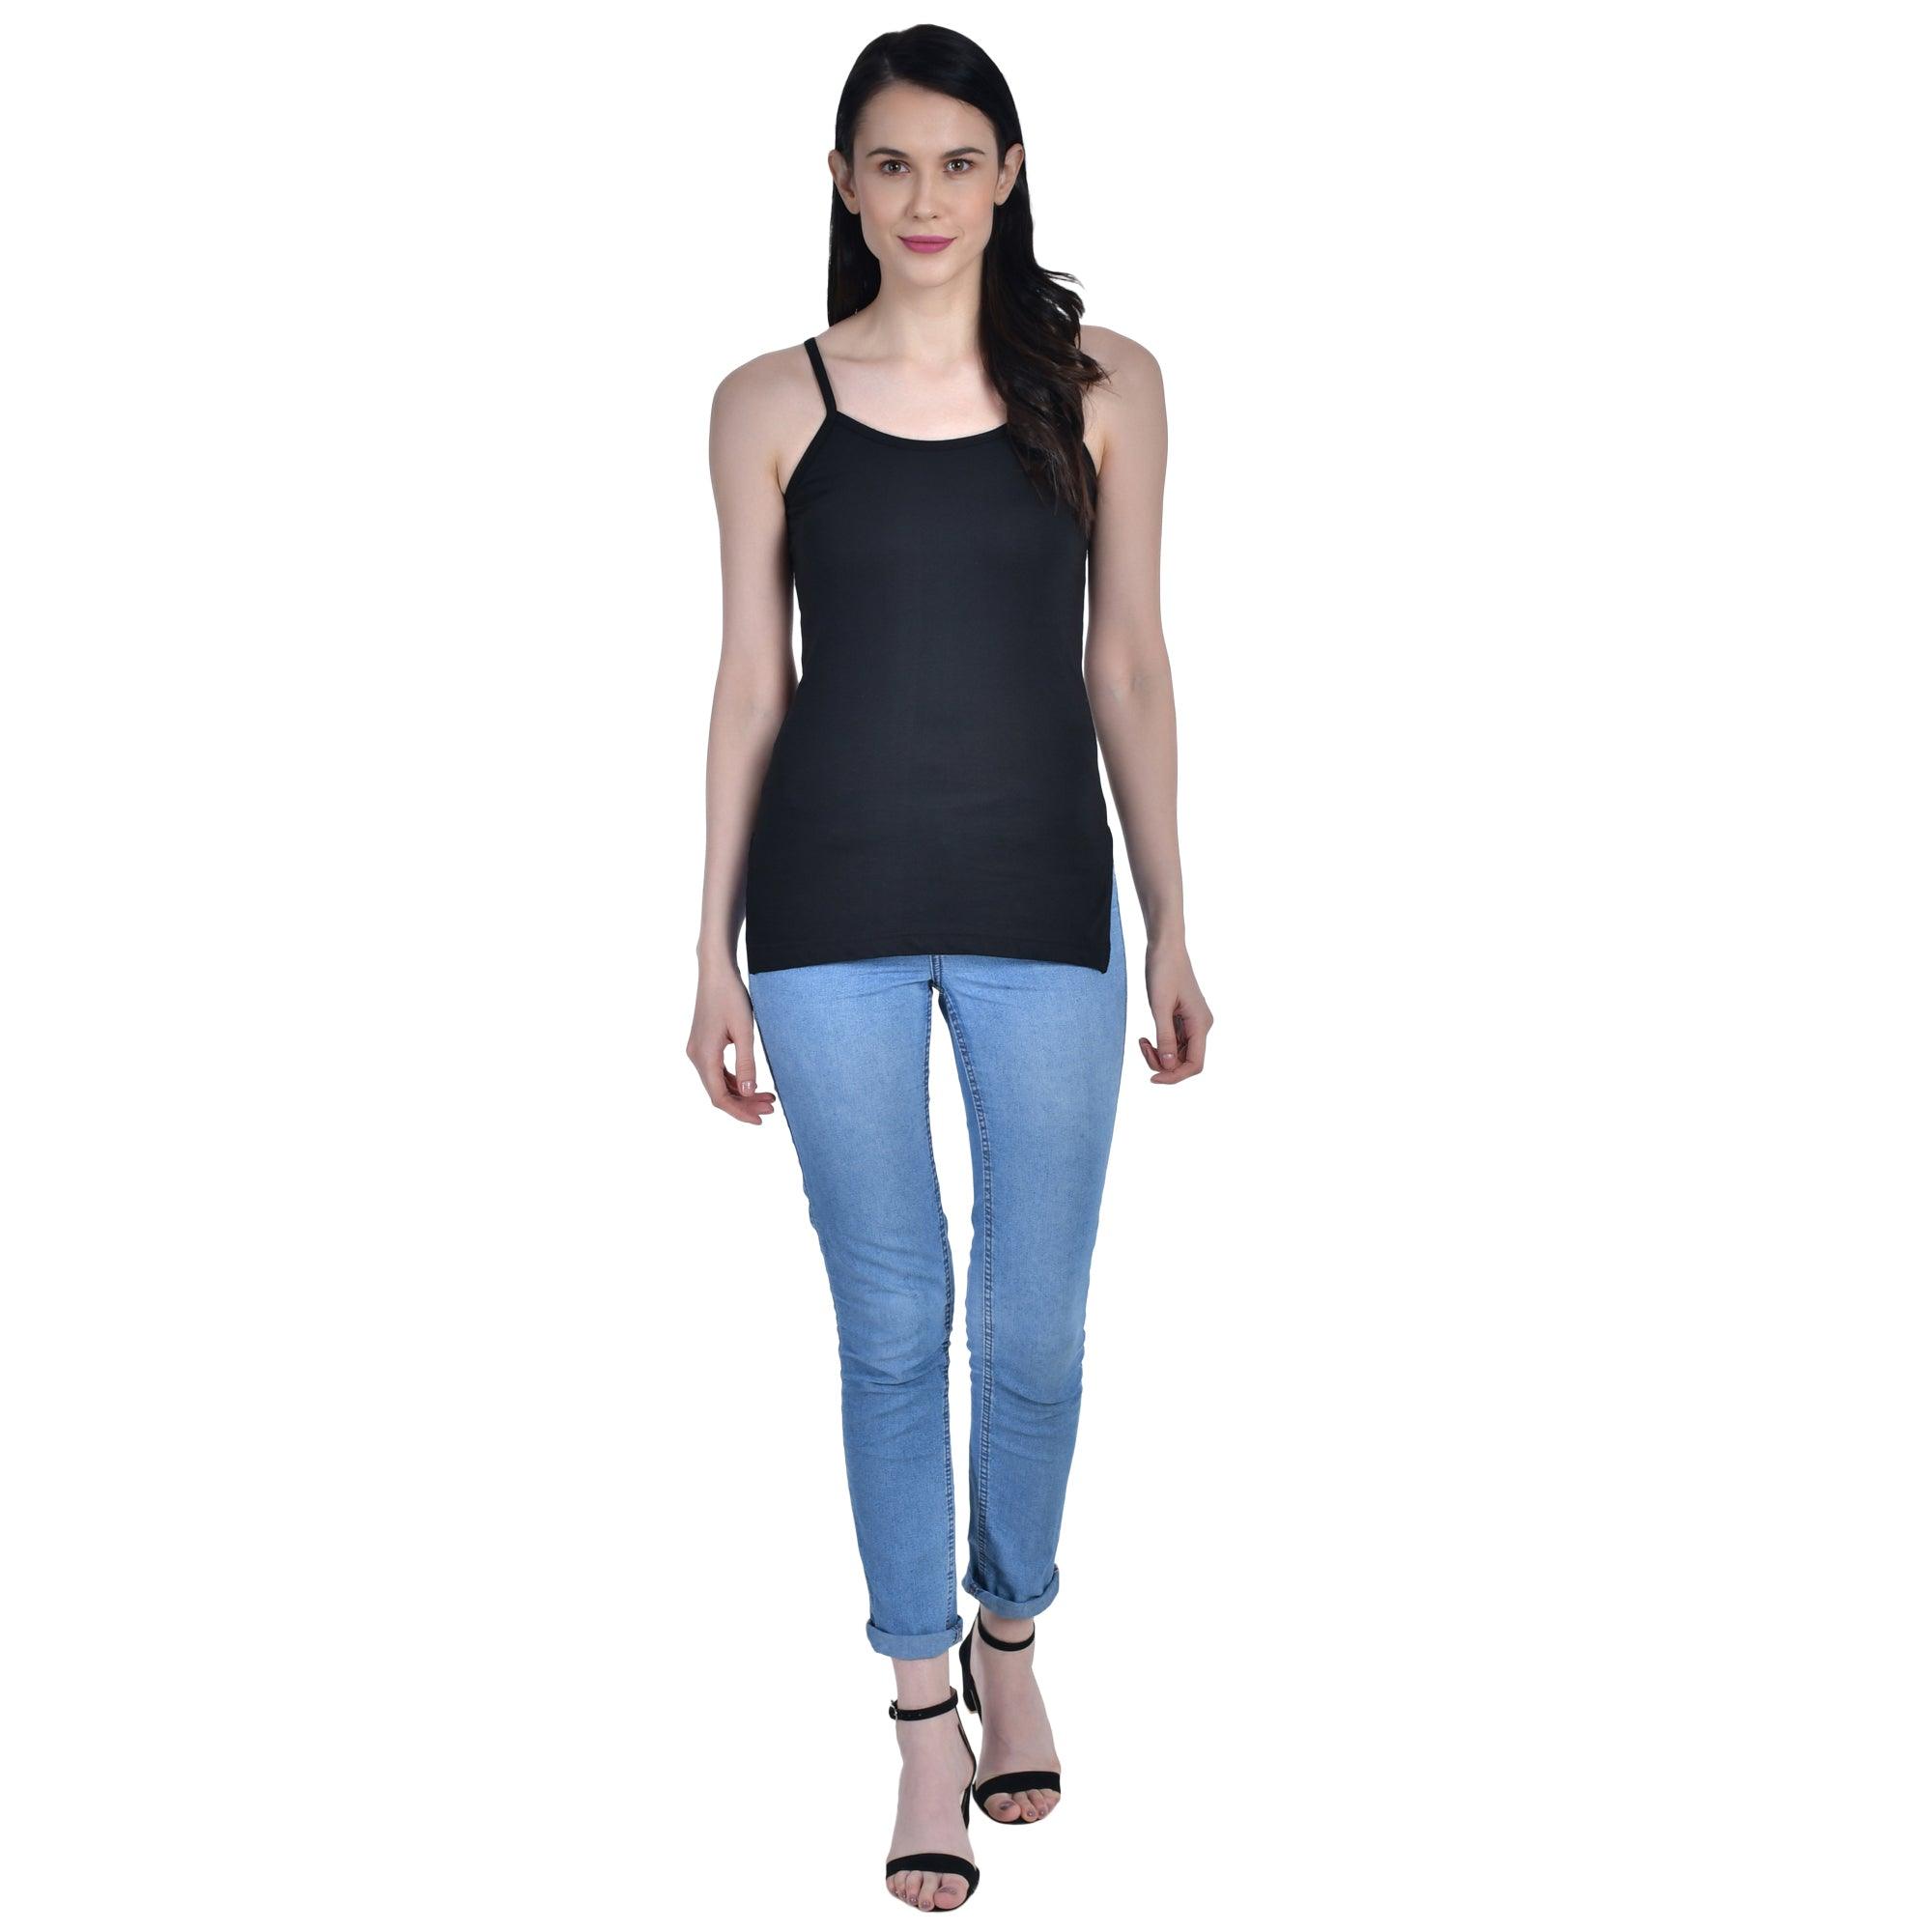 Buy Aimly Women's Cotton Camisole Slip Beige Black XL Pack of 2